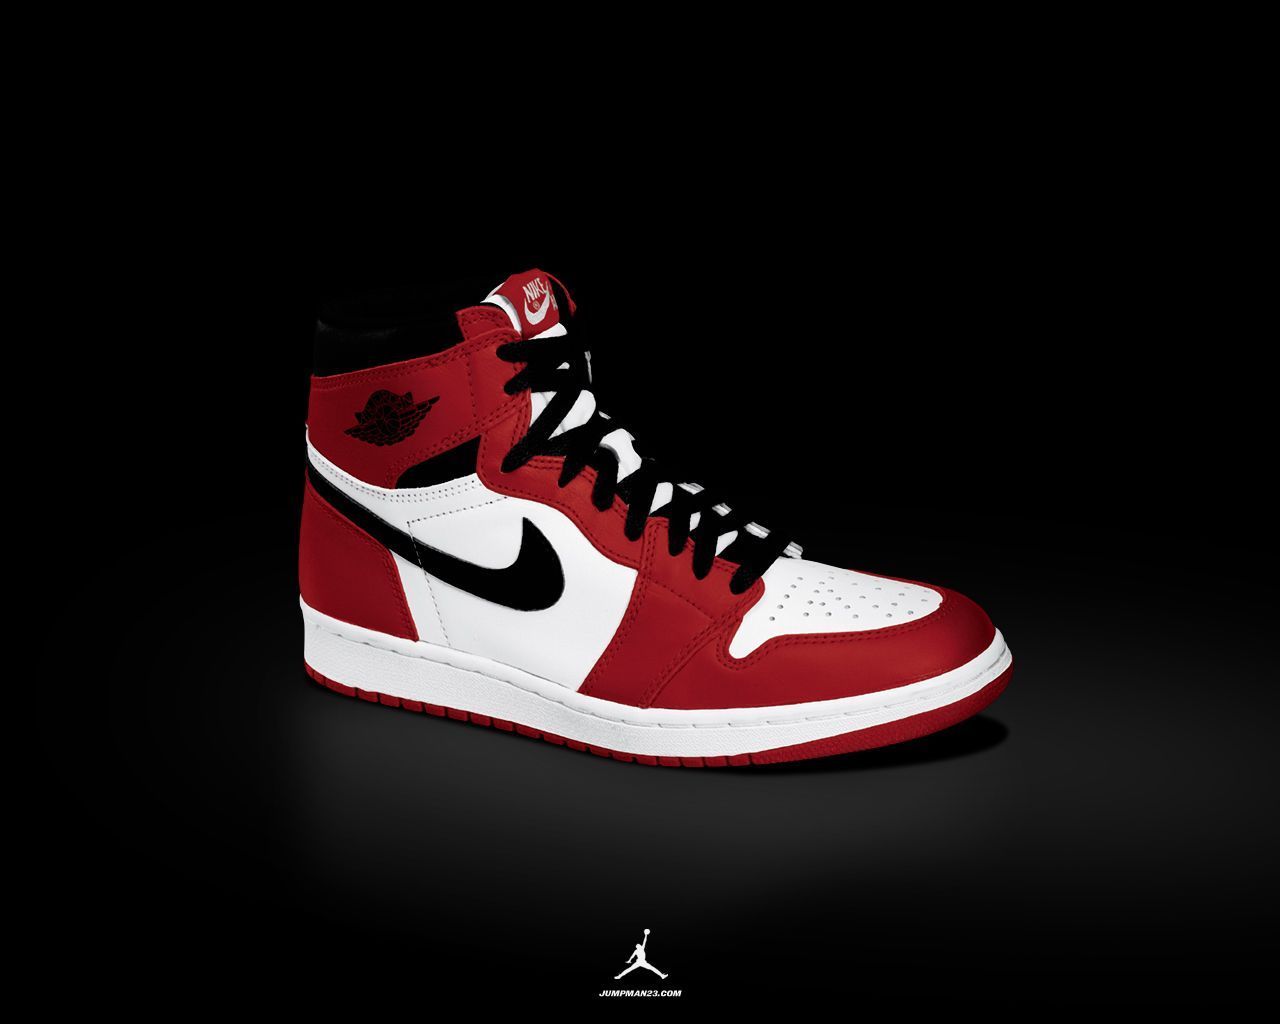 Red Nike Shoe In Black Background 4K HD Nike Wallpapers  HD Wallpapers   ID 49588